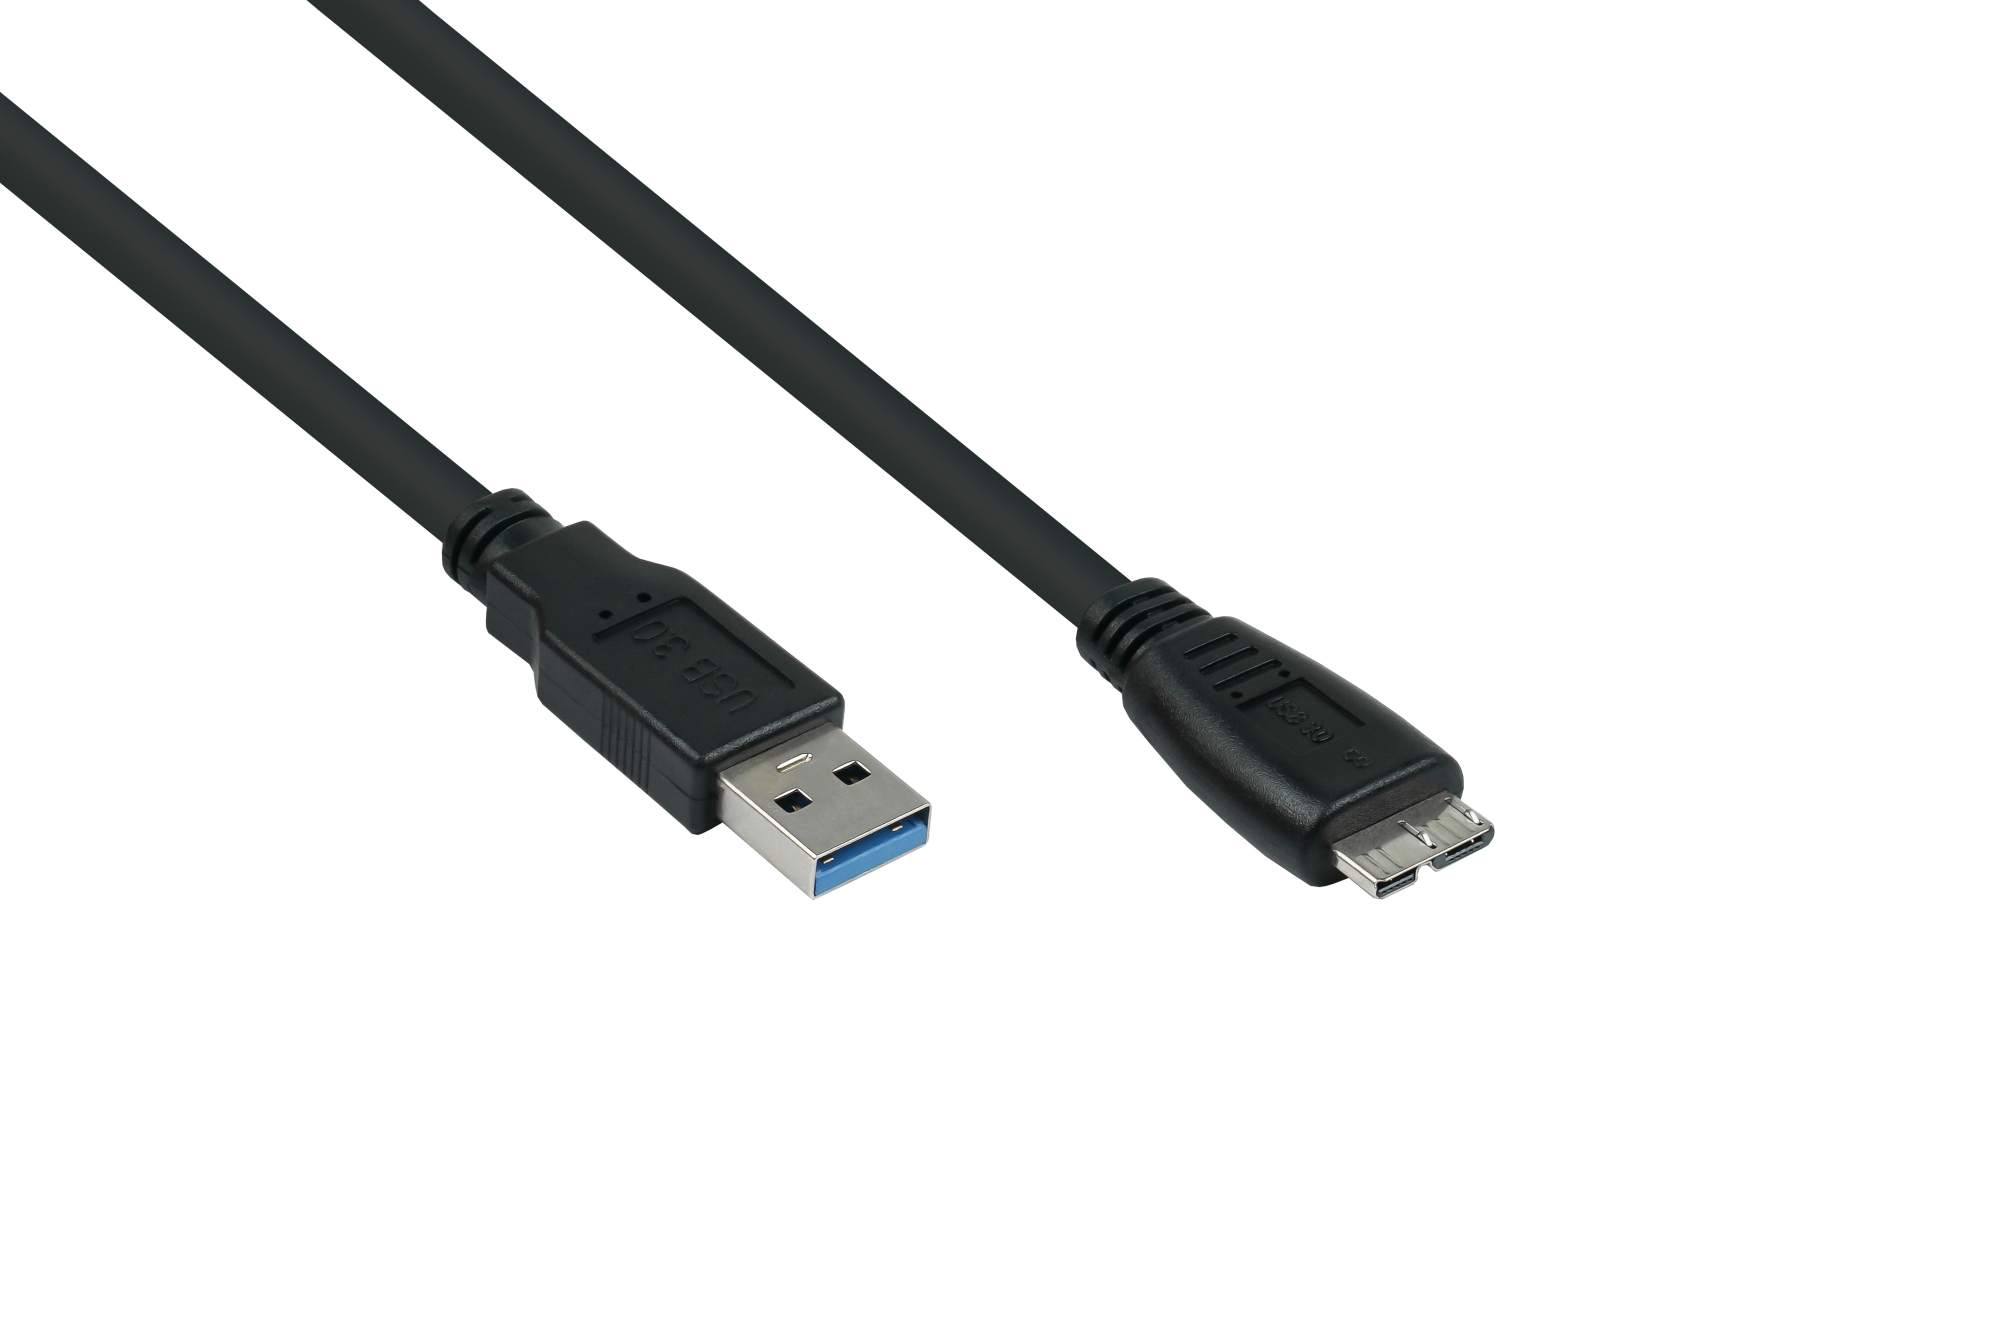 USB 3.0 Kabel Stecker A an Stecker Micro B, Premium, AWG28 / AWG24, UL, KUPFER, schwarz, 1,8m